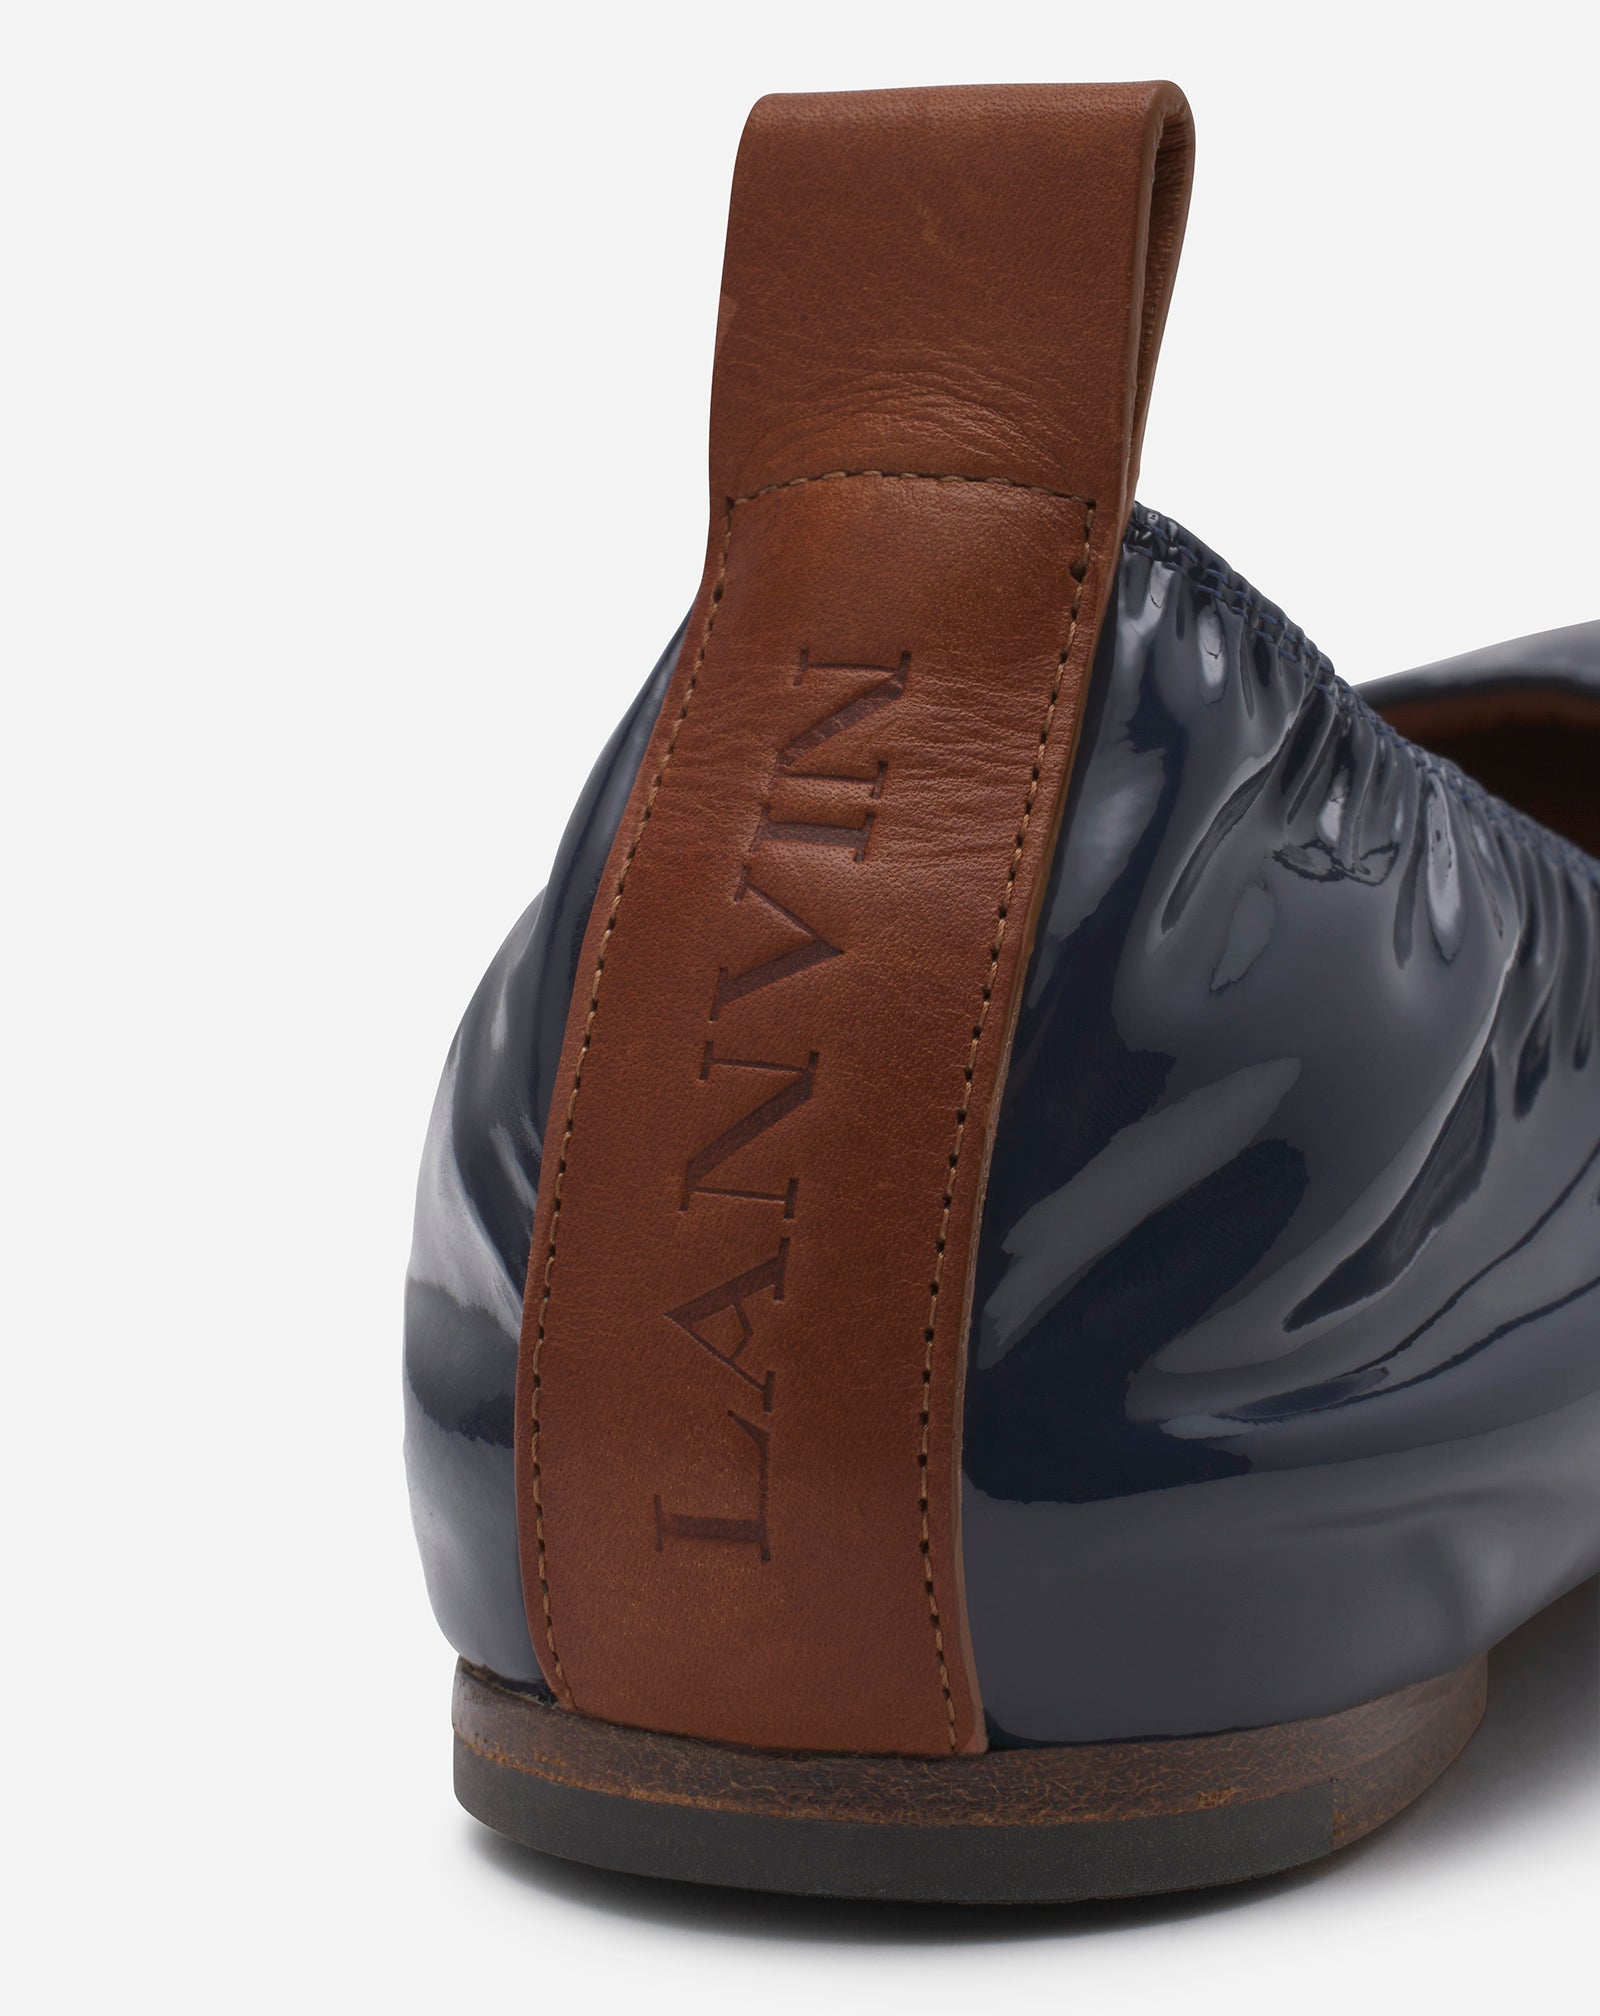 Lanvin leather ballerina shoes - Black